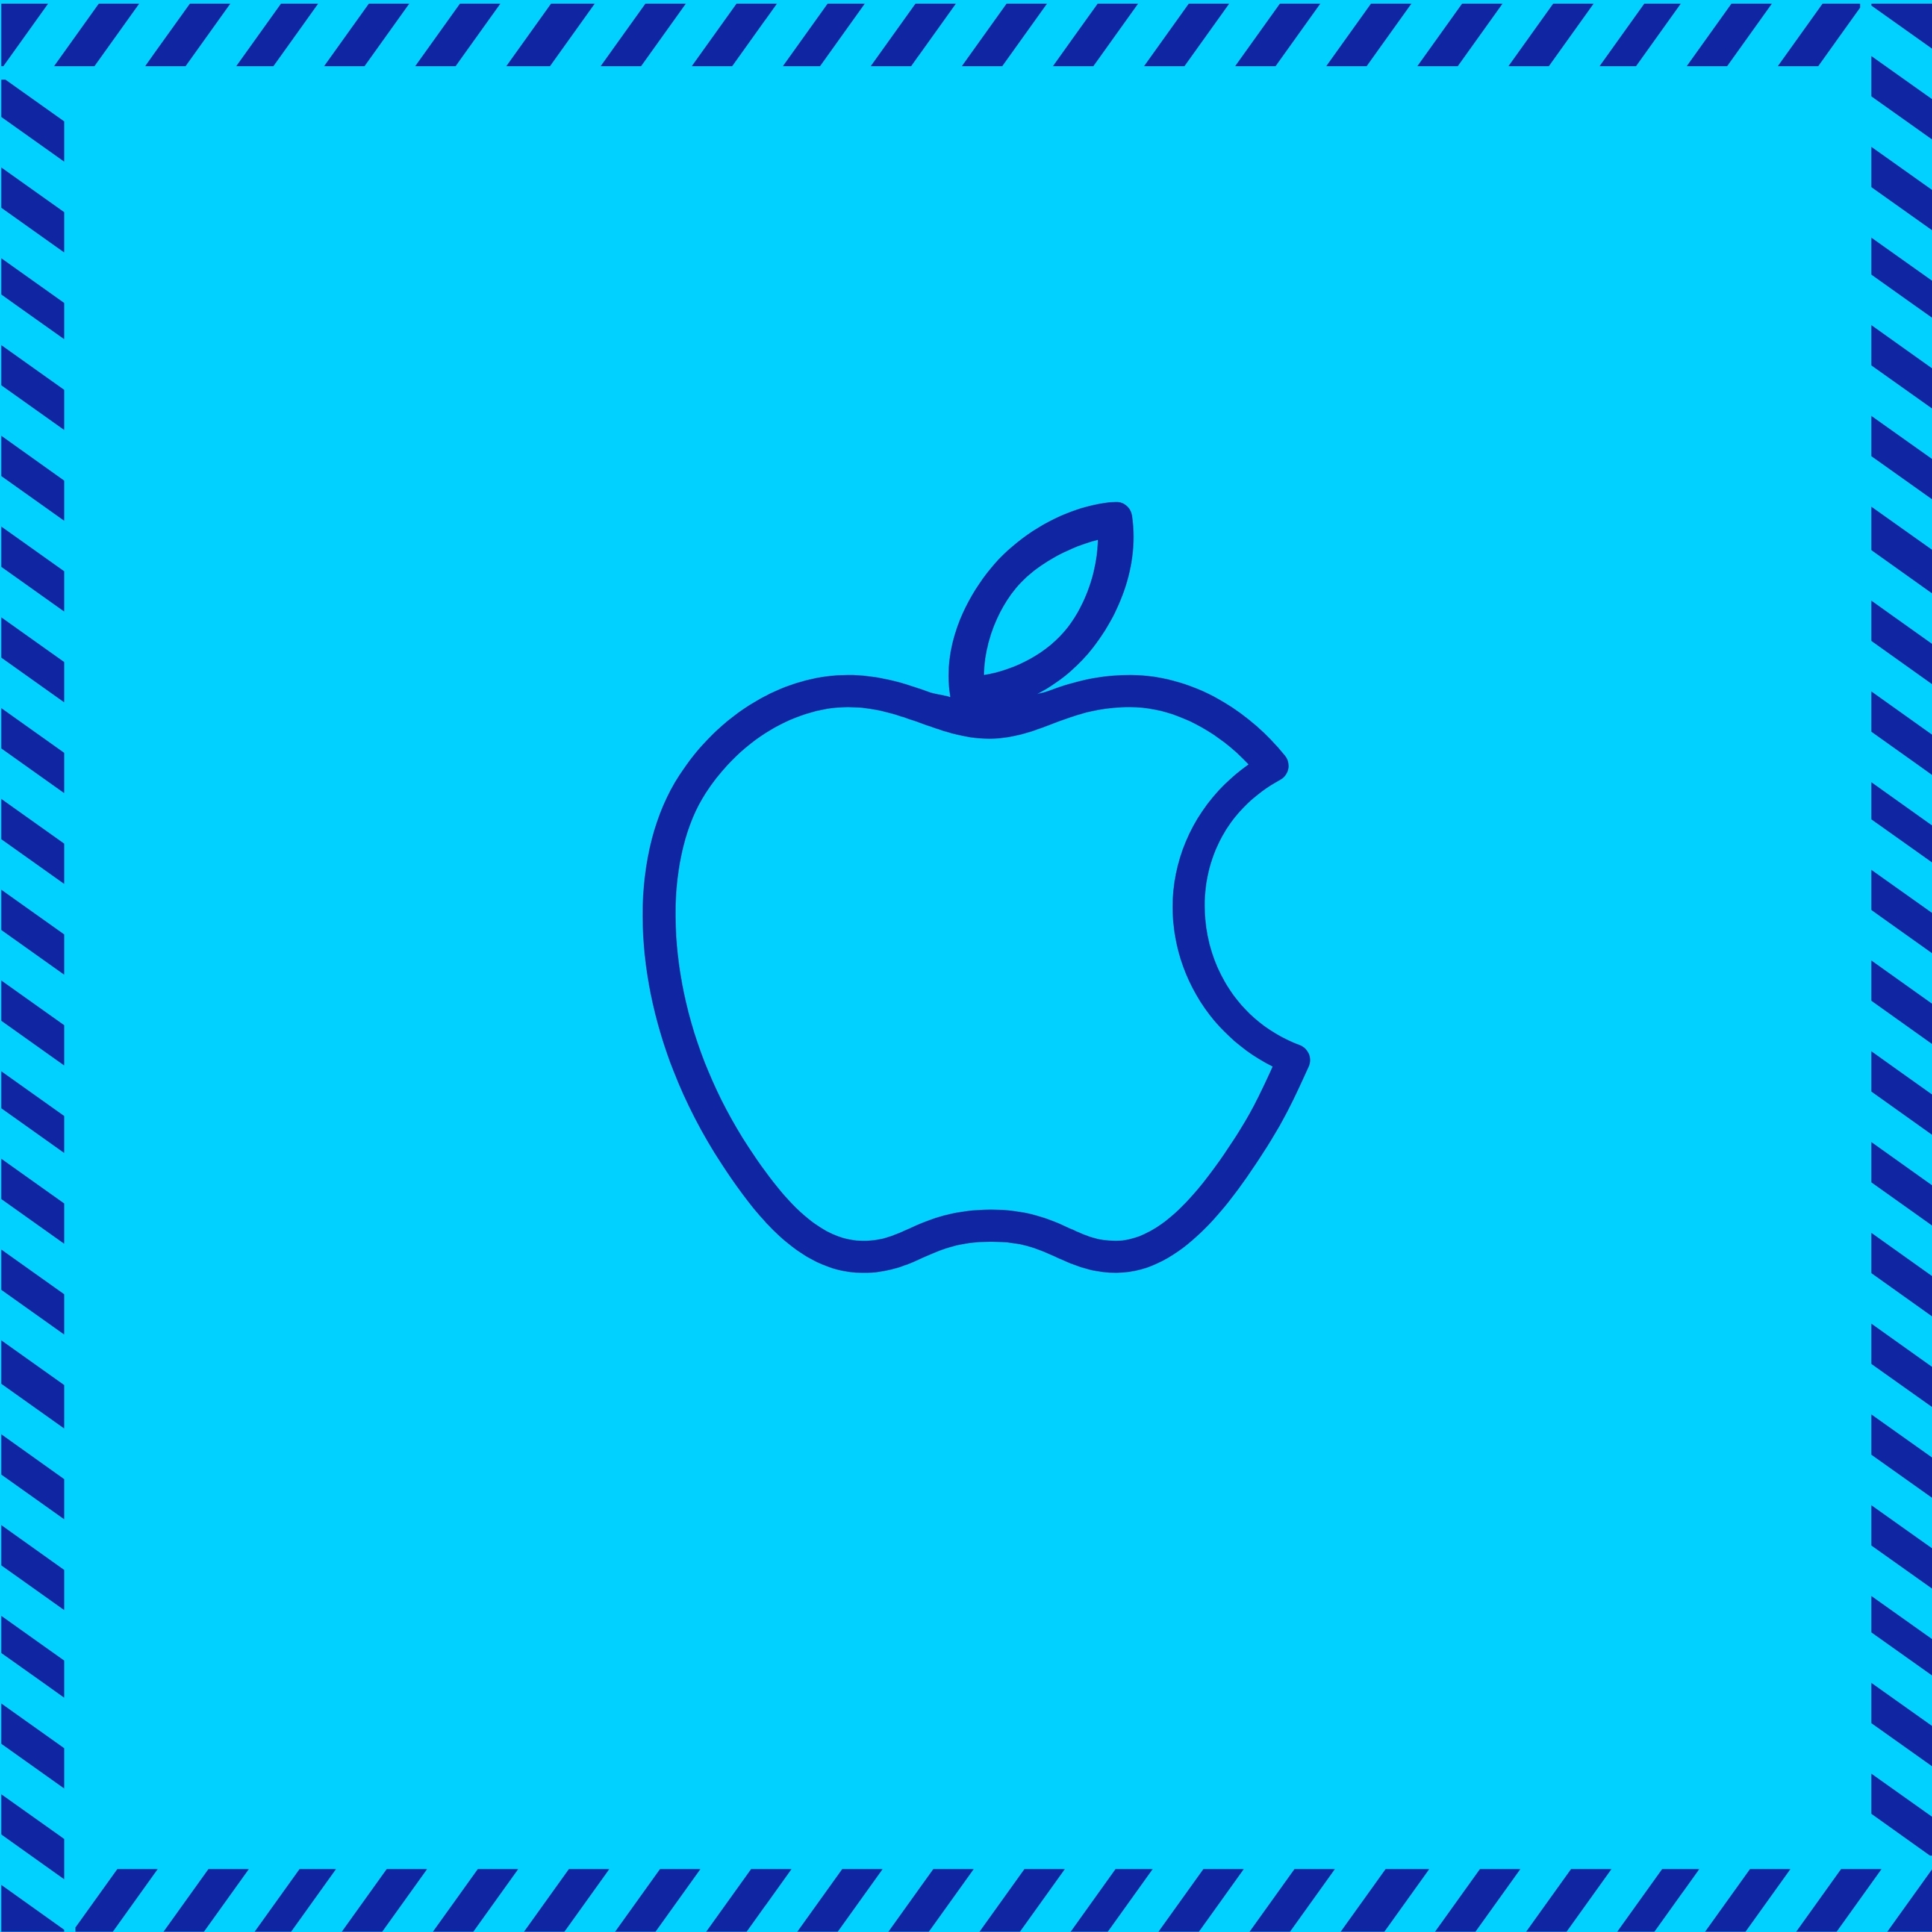 iPad Wallpapers Apple Logo Blue Stripe Border iPad Wallpaper 3208x3208 px